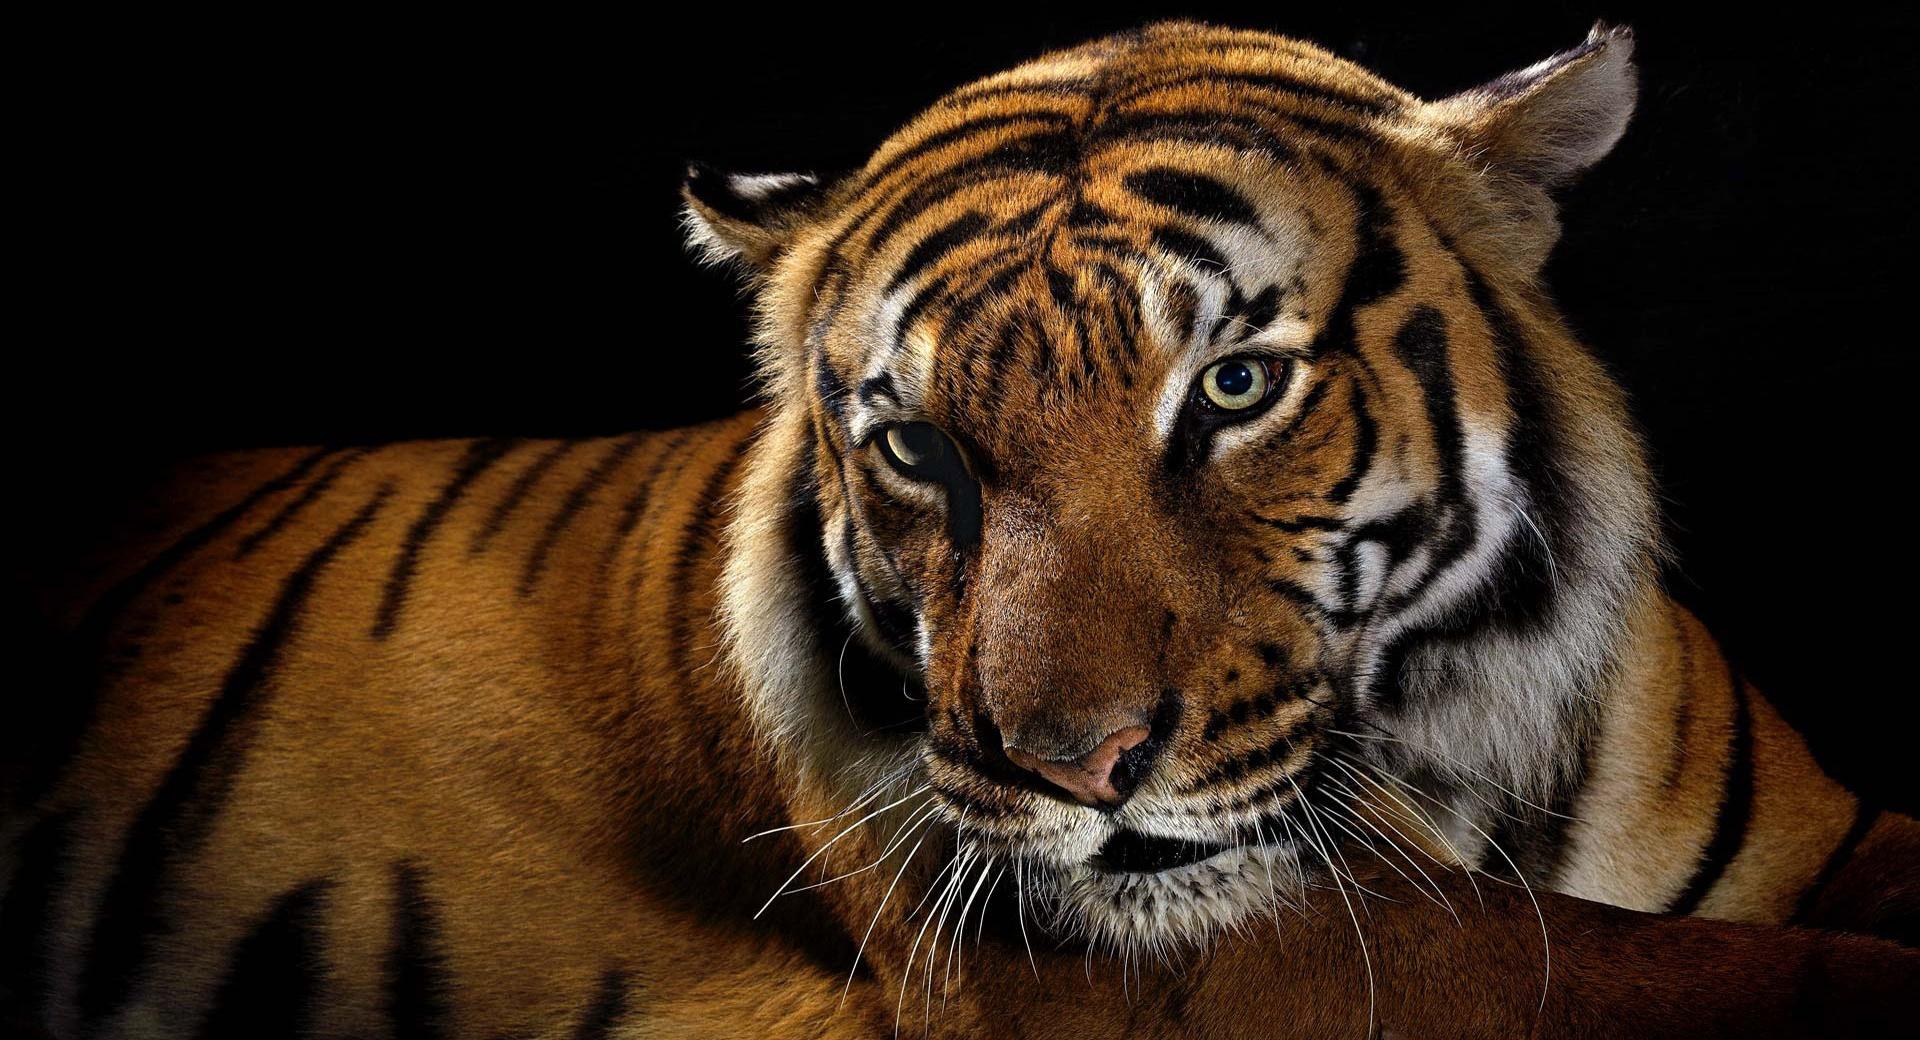 Beautiful Tiger at 1024 x 1024 iPad size wallpapers HD quality